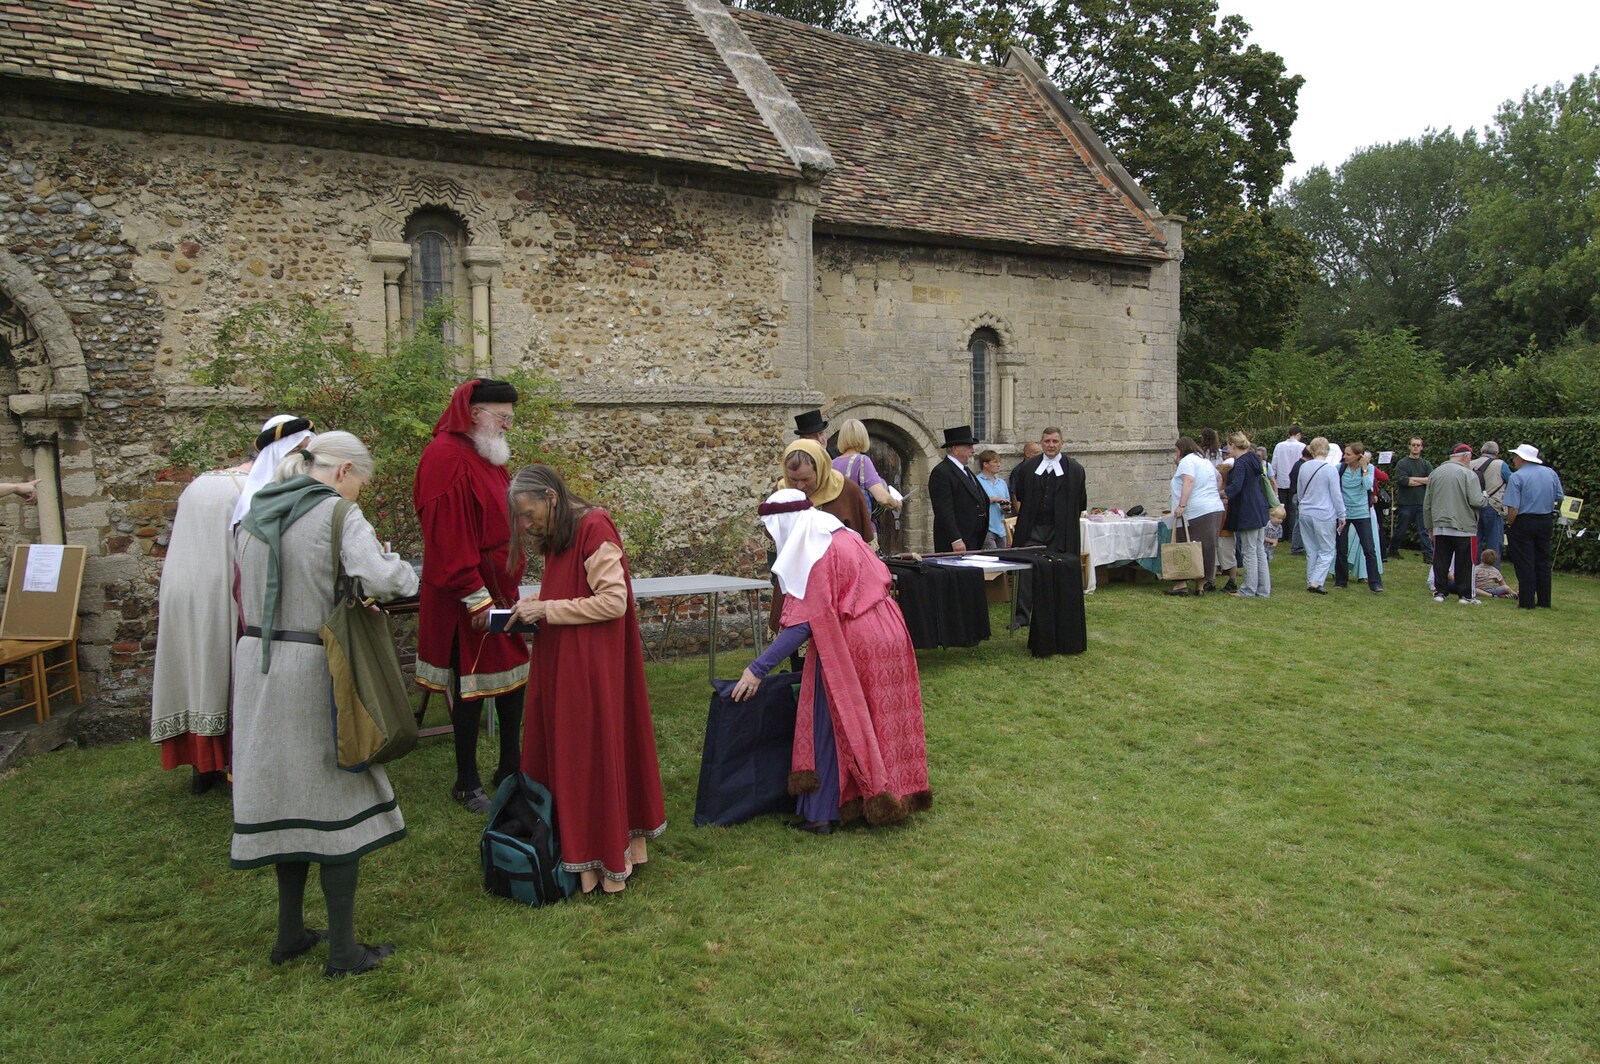 More period dress from Stourbridge Fair at the Leper Chapel, Cambridge - 8th September 2007